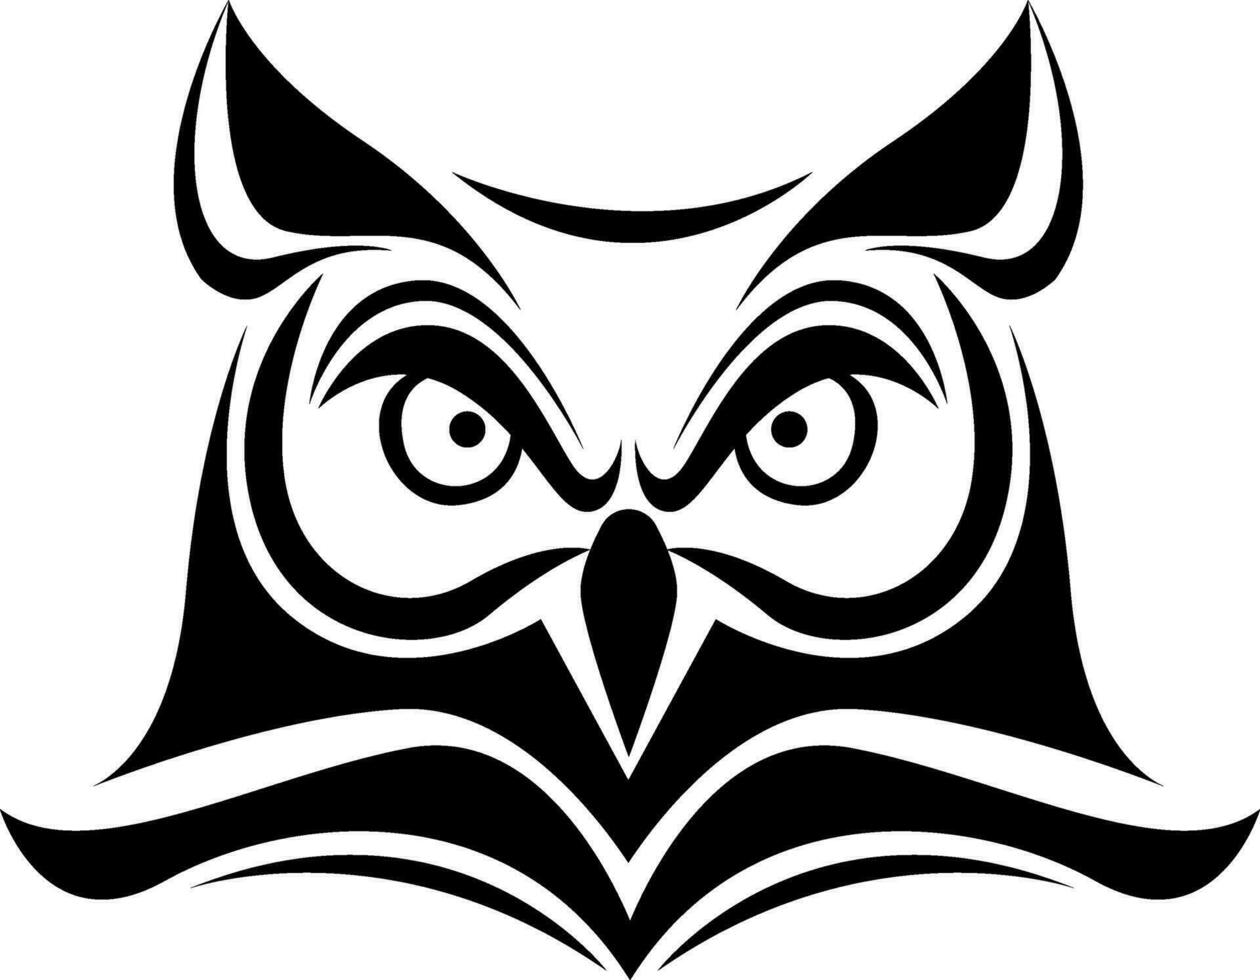 Owl bird tattoo, tattoo illustration, vector on a white background.